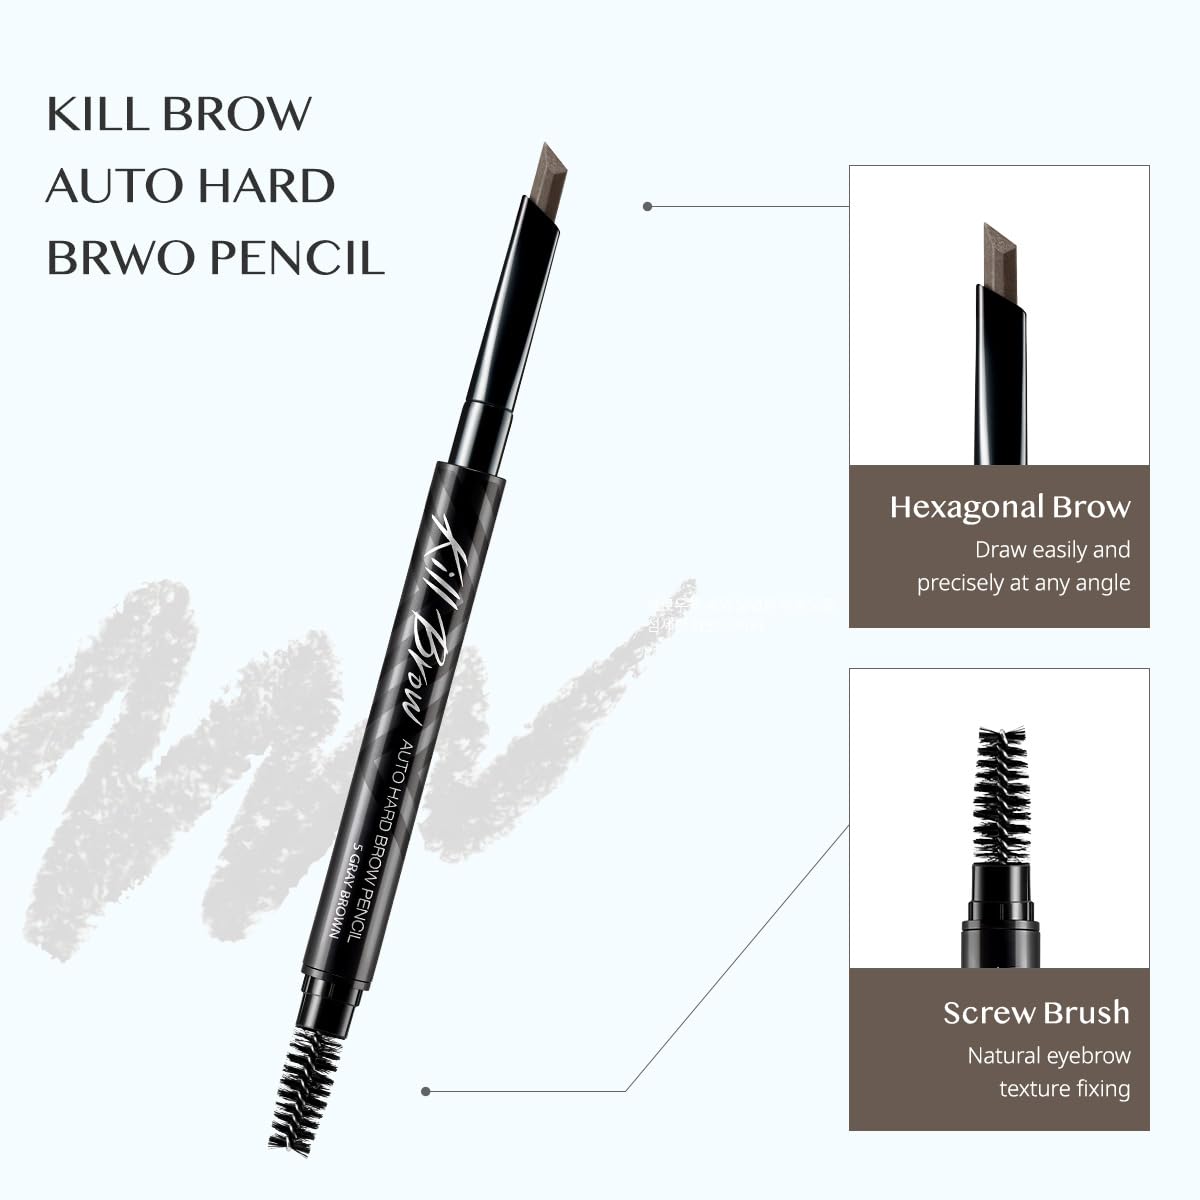 CLIO Kill Brow Auto Hard Eyebrow Pencil, Dual-End, Long Lasting, Waterproof, Smudge-Resistant, Spoolie Brush, Sharpener (05 Gray Brown)